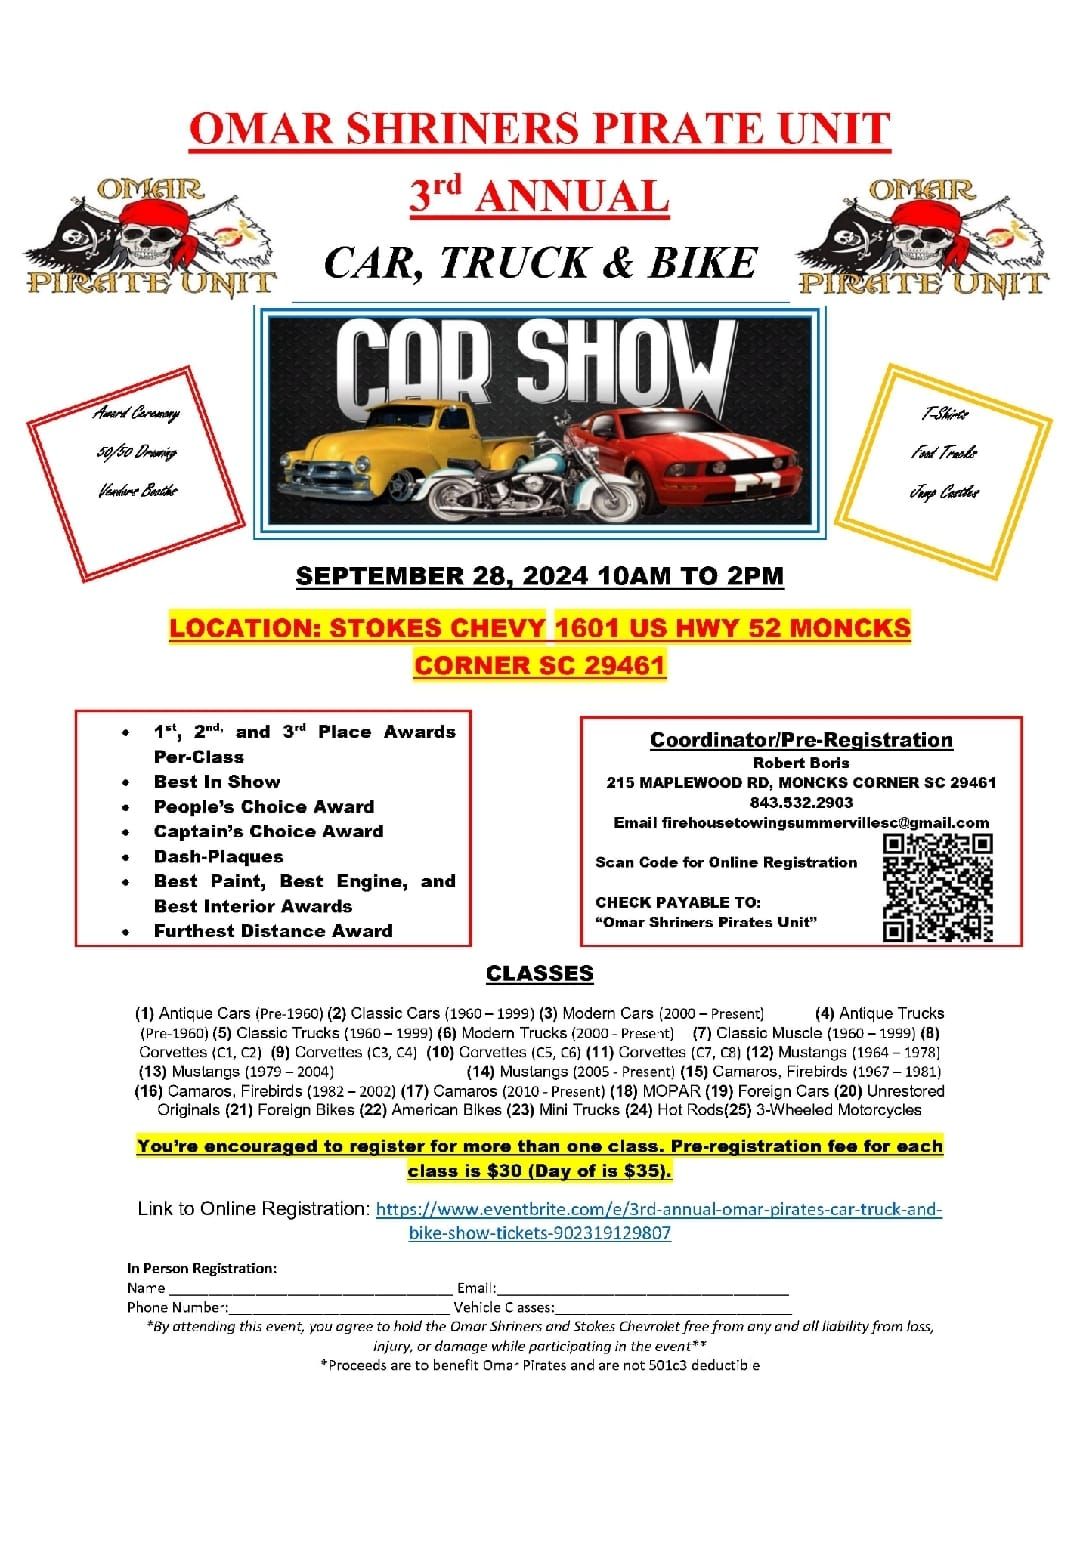 3rd Annual Car, Truck and Bike Show